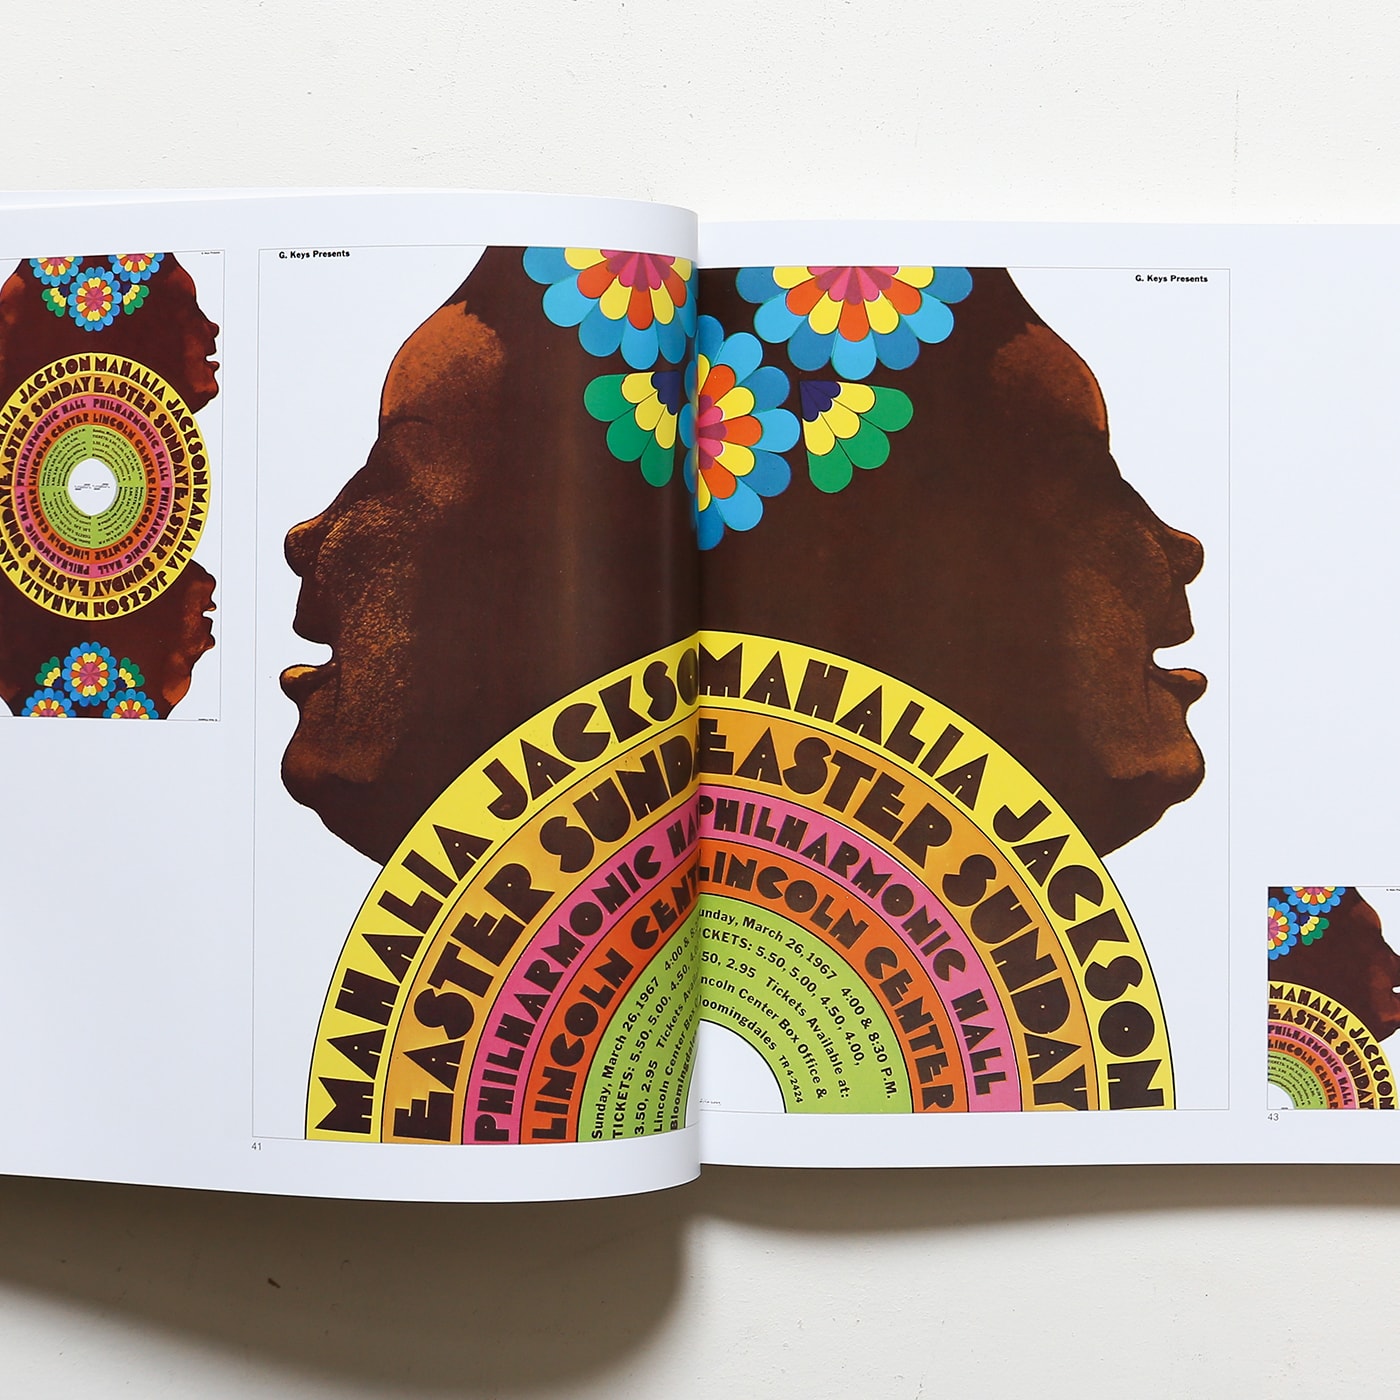 Milton Glaser: Graphic Design